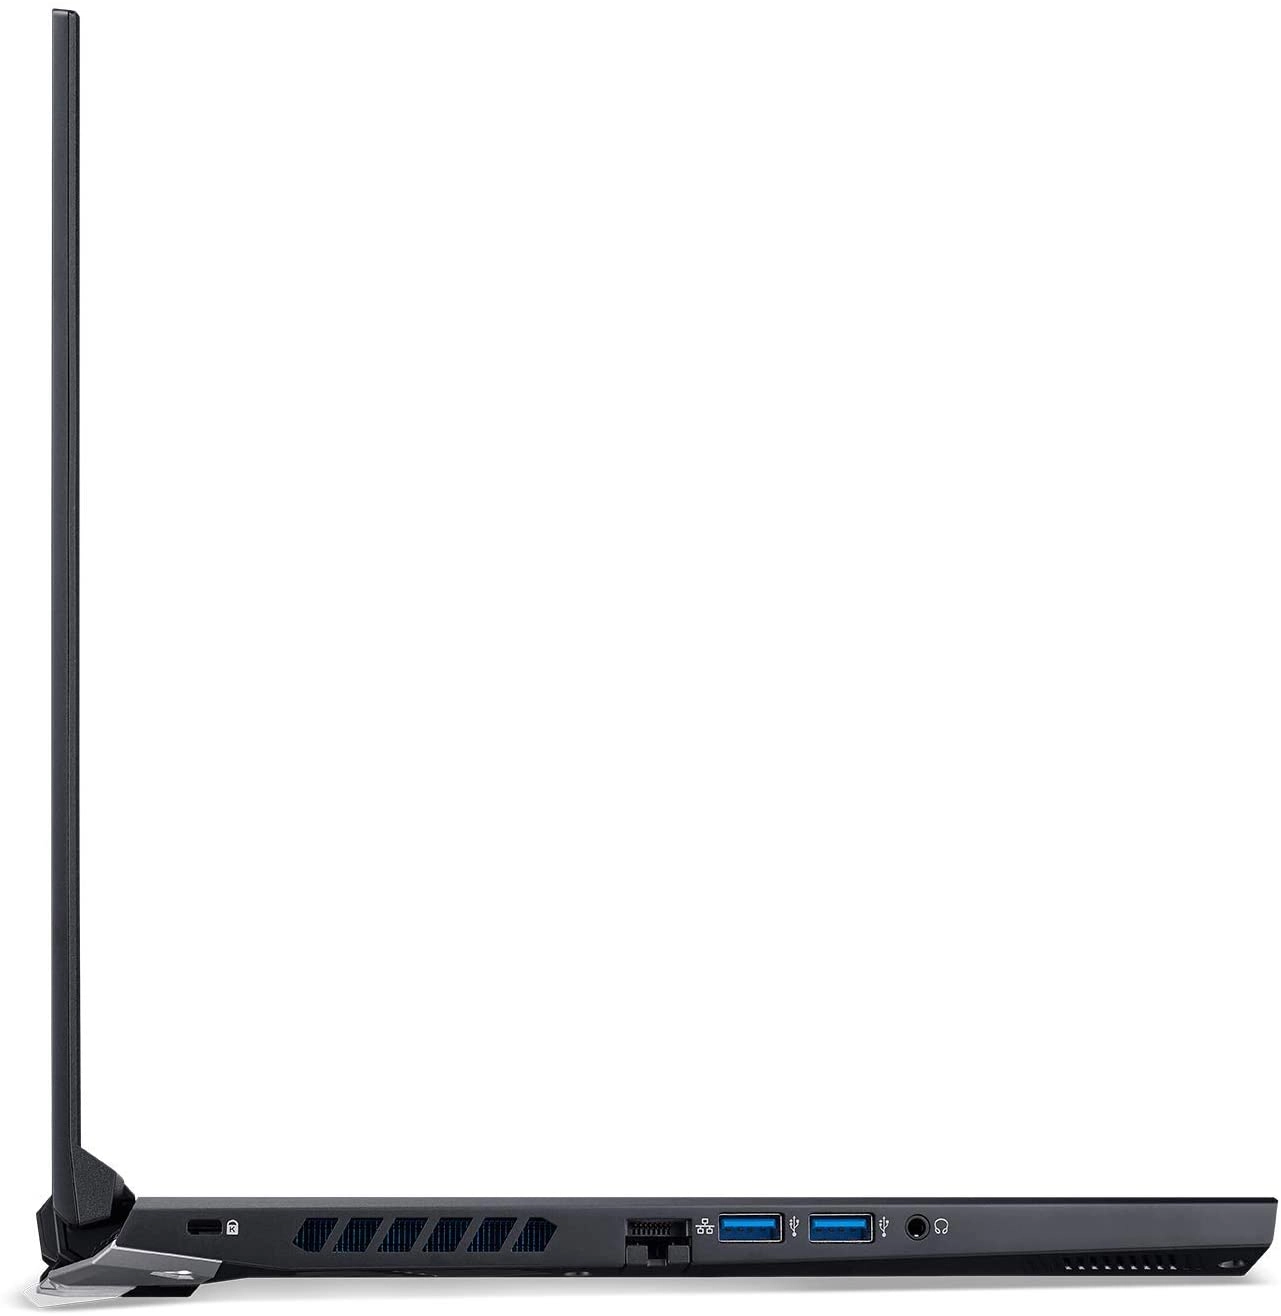 Acer Predator Helios 300 laptop image